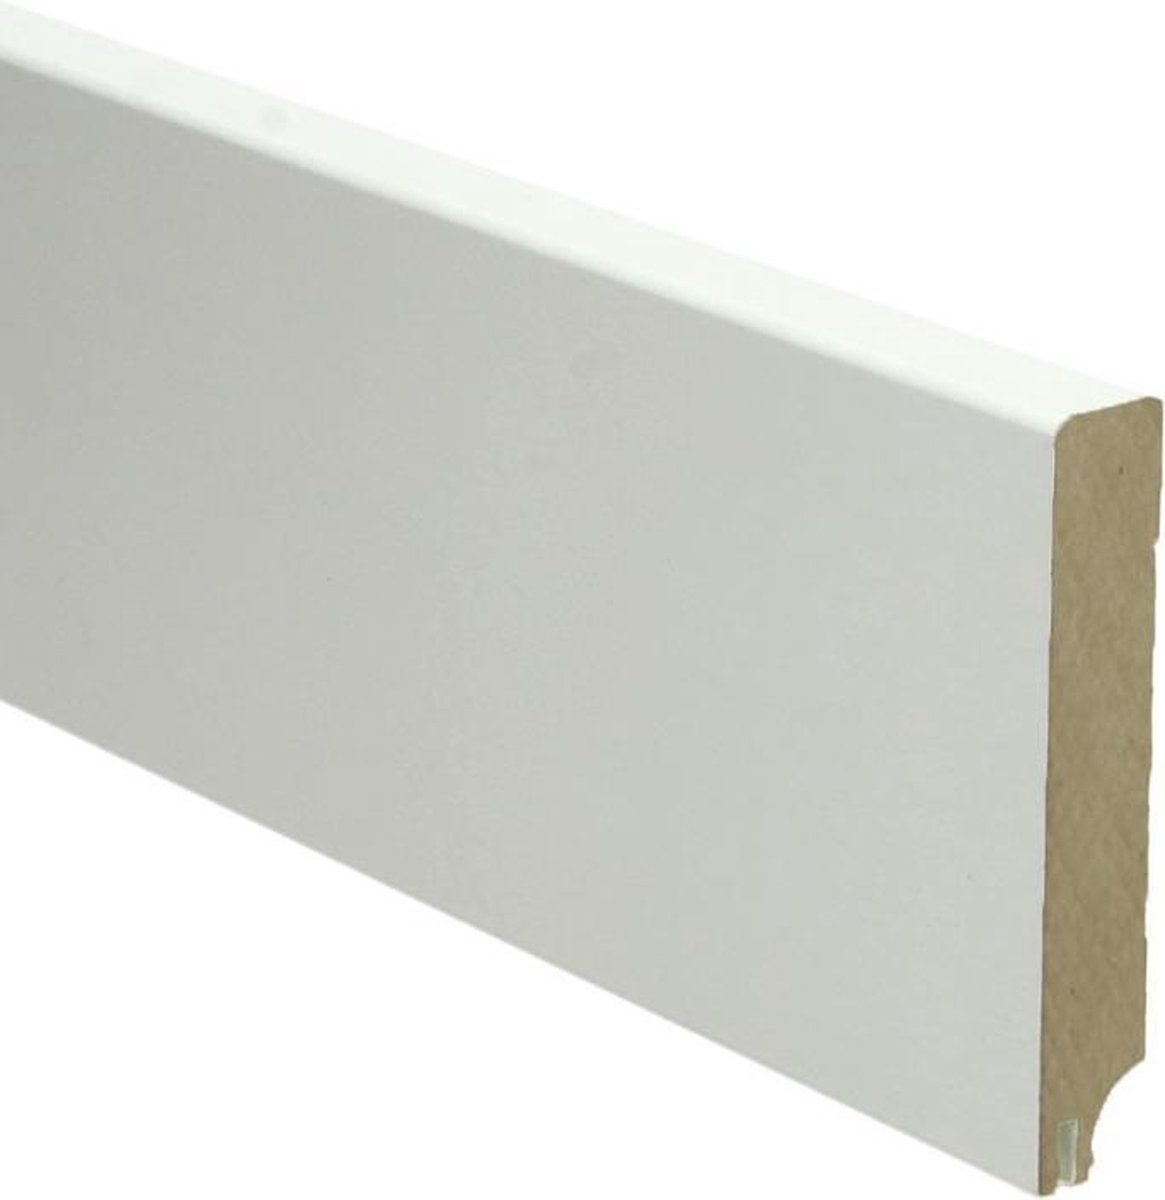 Hoge plinten - MDF - Moderne plint 90x15 mm - Wit - Voorgelakt - RAL 9010 - Per 5 stuks 2,4m